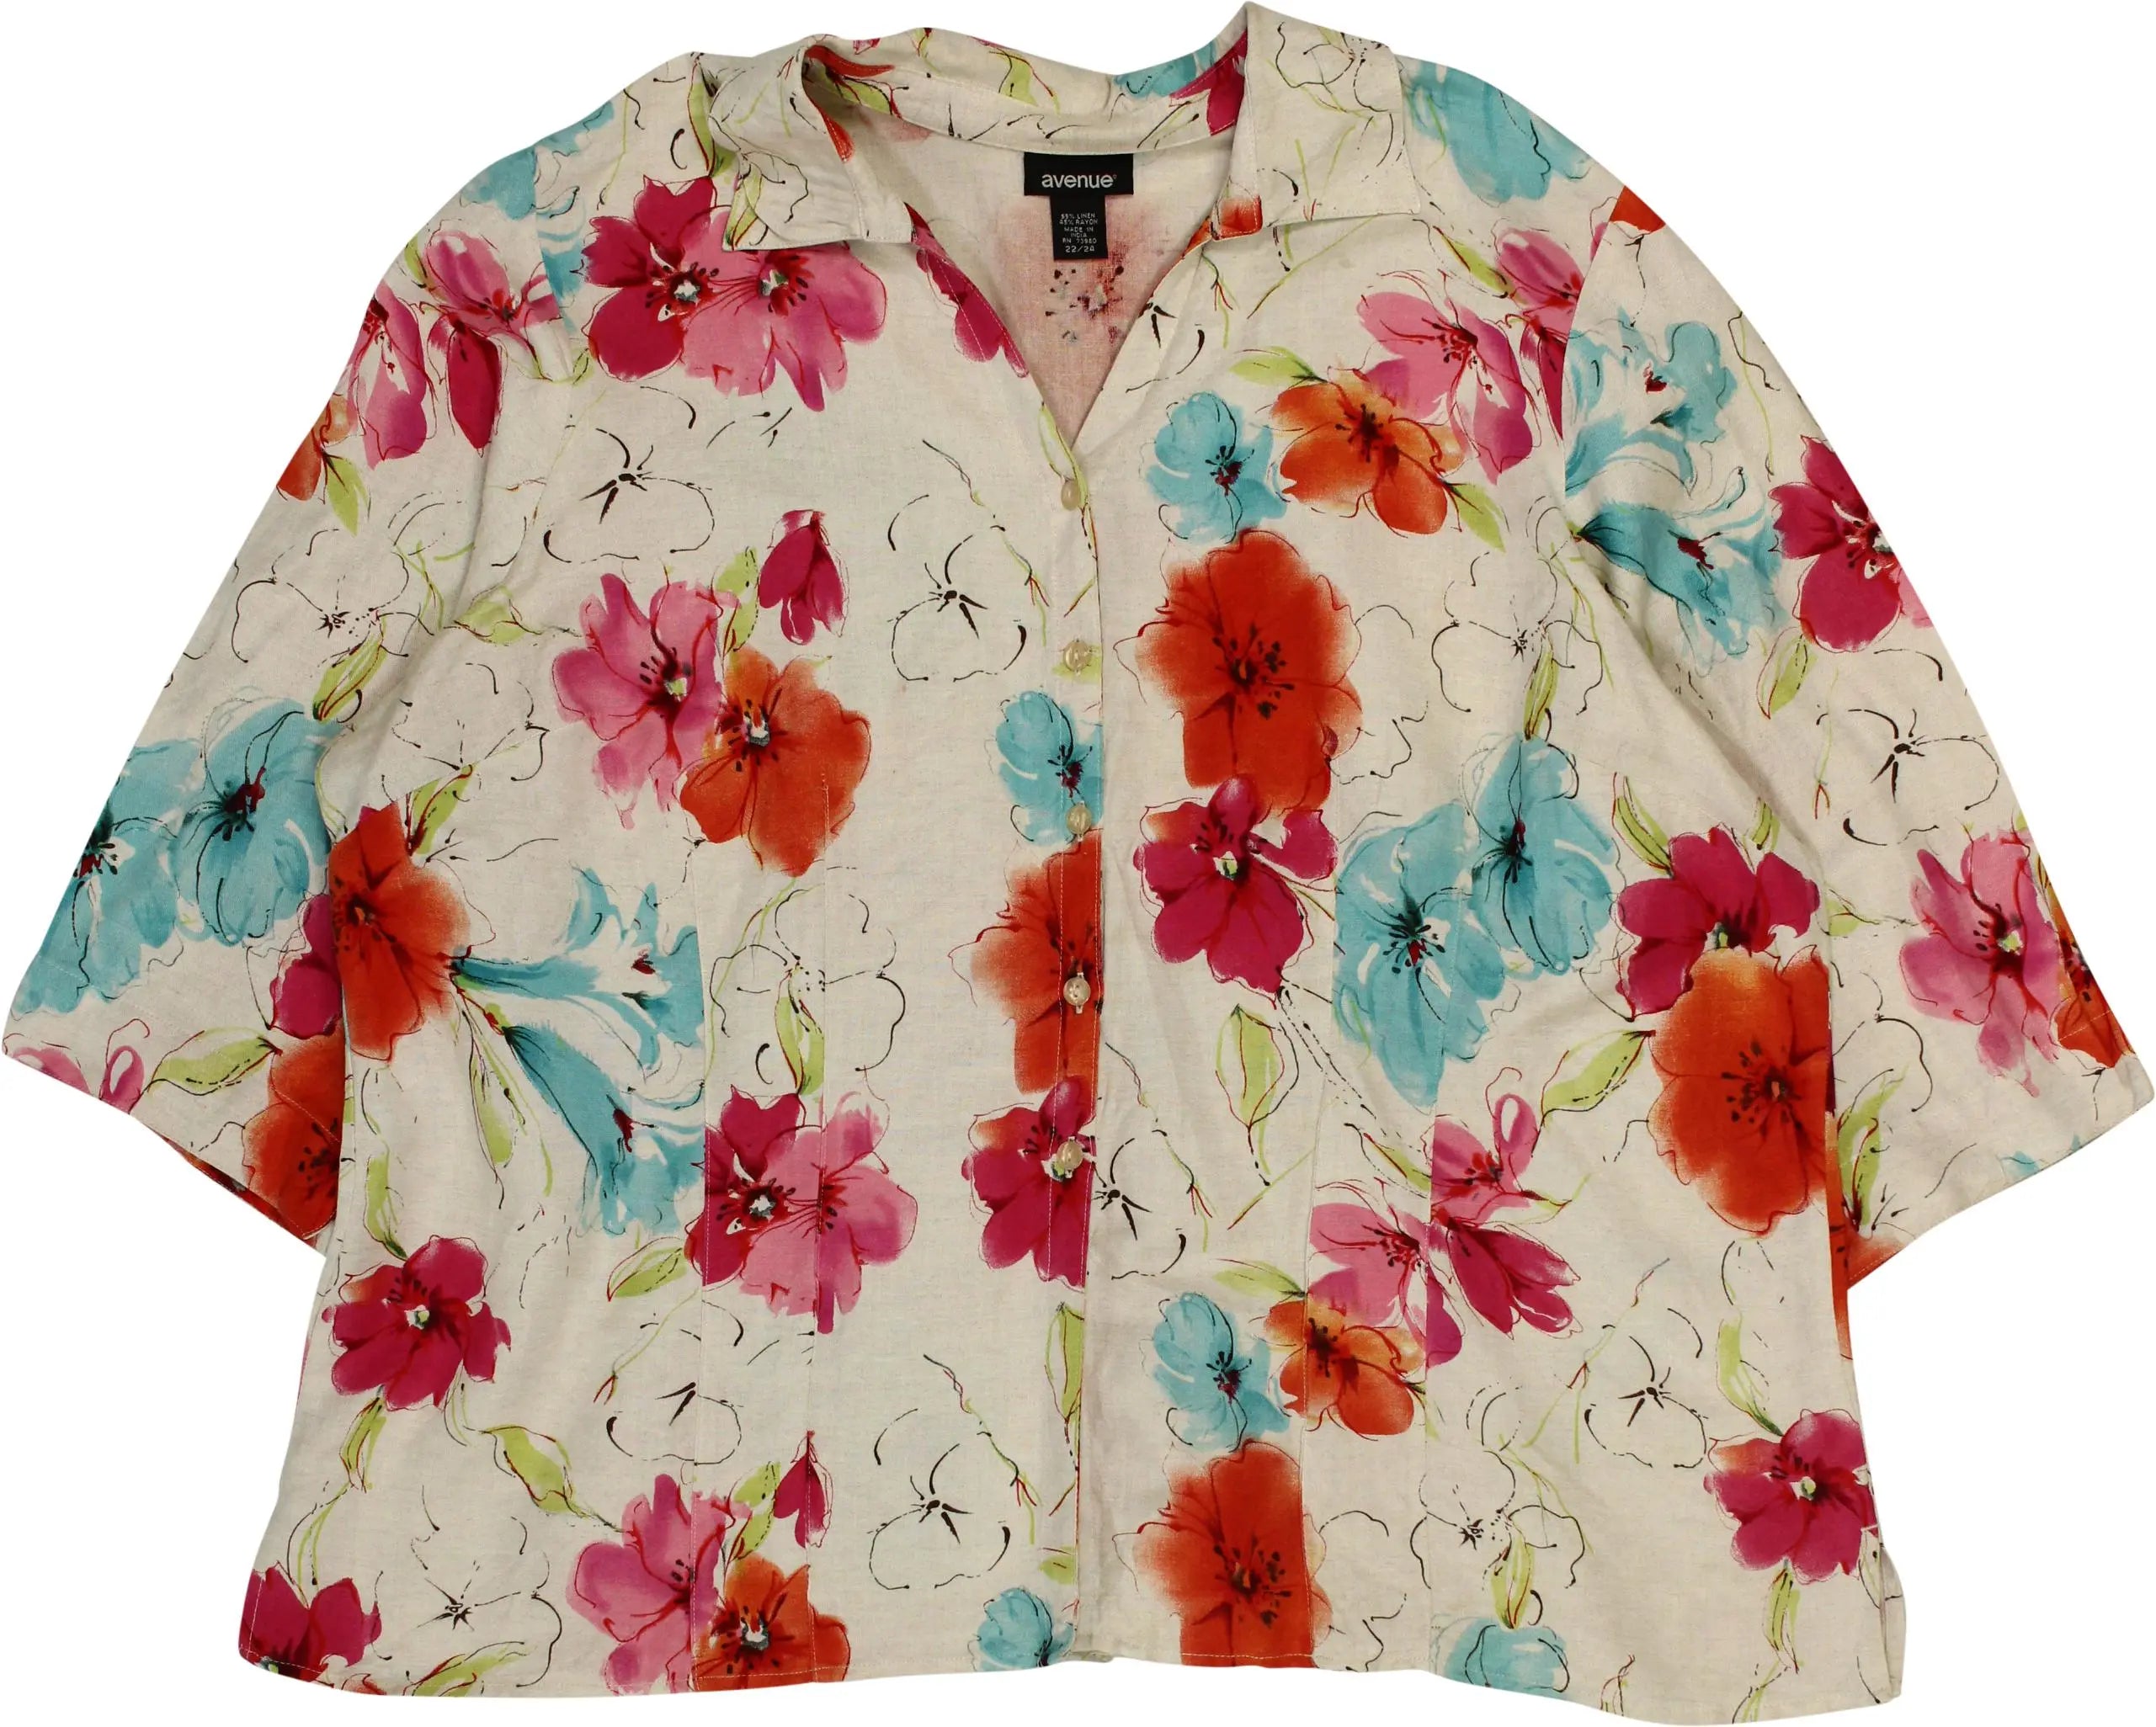 Avenue - Linen Blend Floral Blouse- ThriftTale.com - Vintage and second handclothing